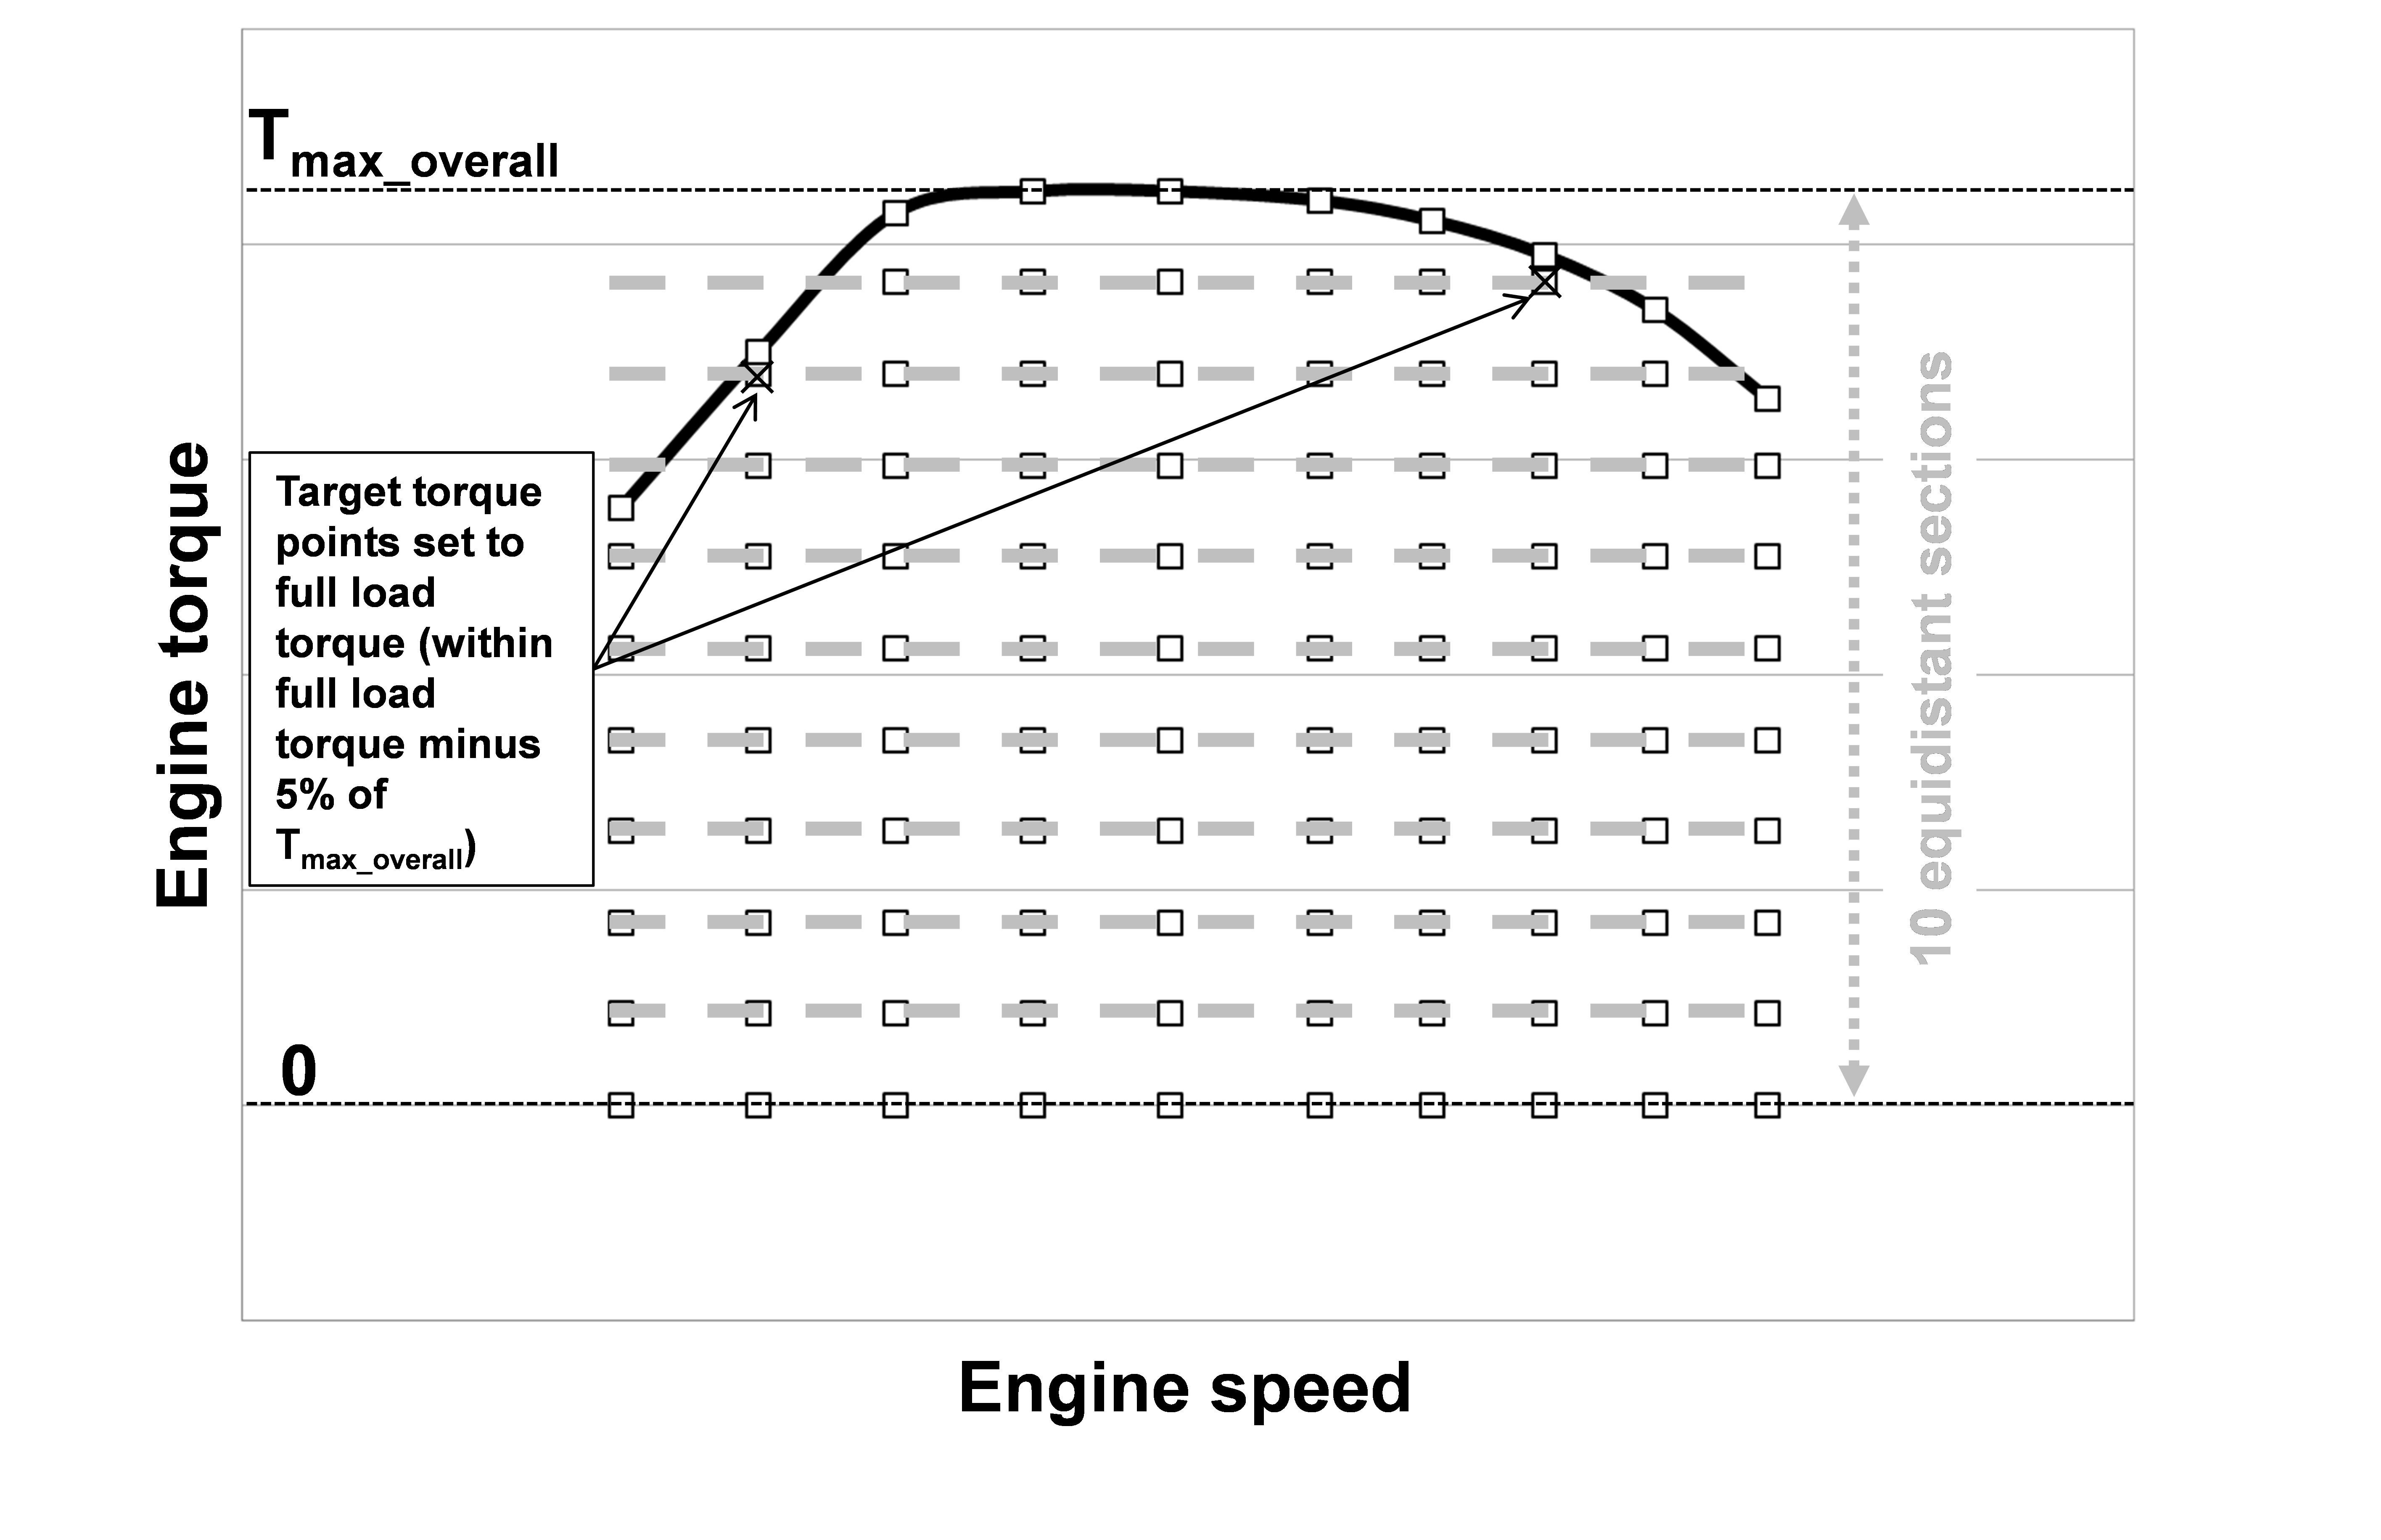 Engine Oil Temperature Range Chart